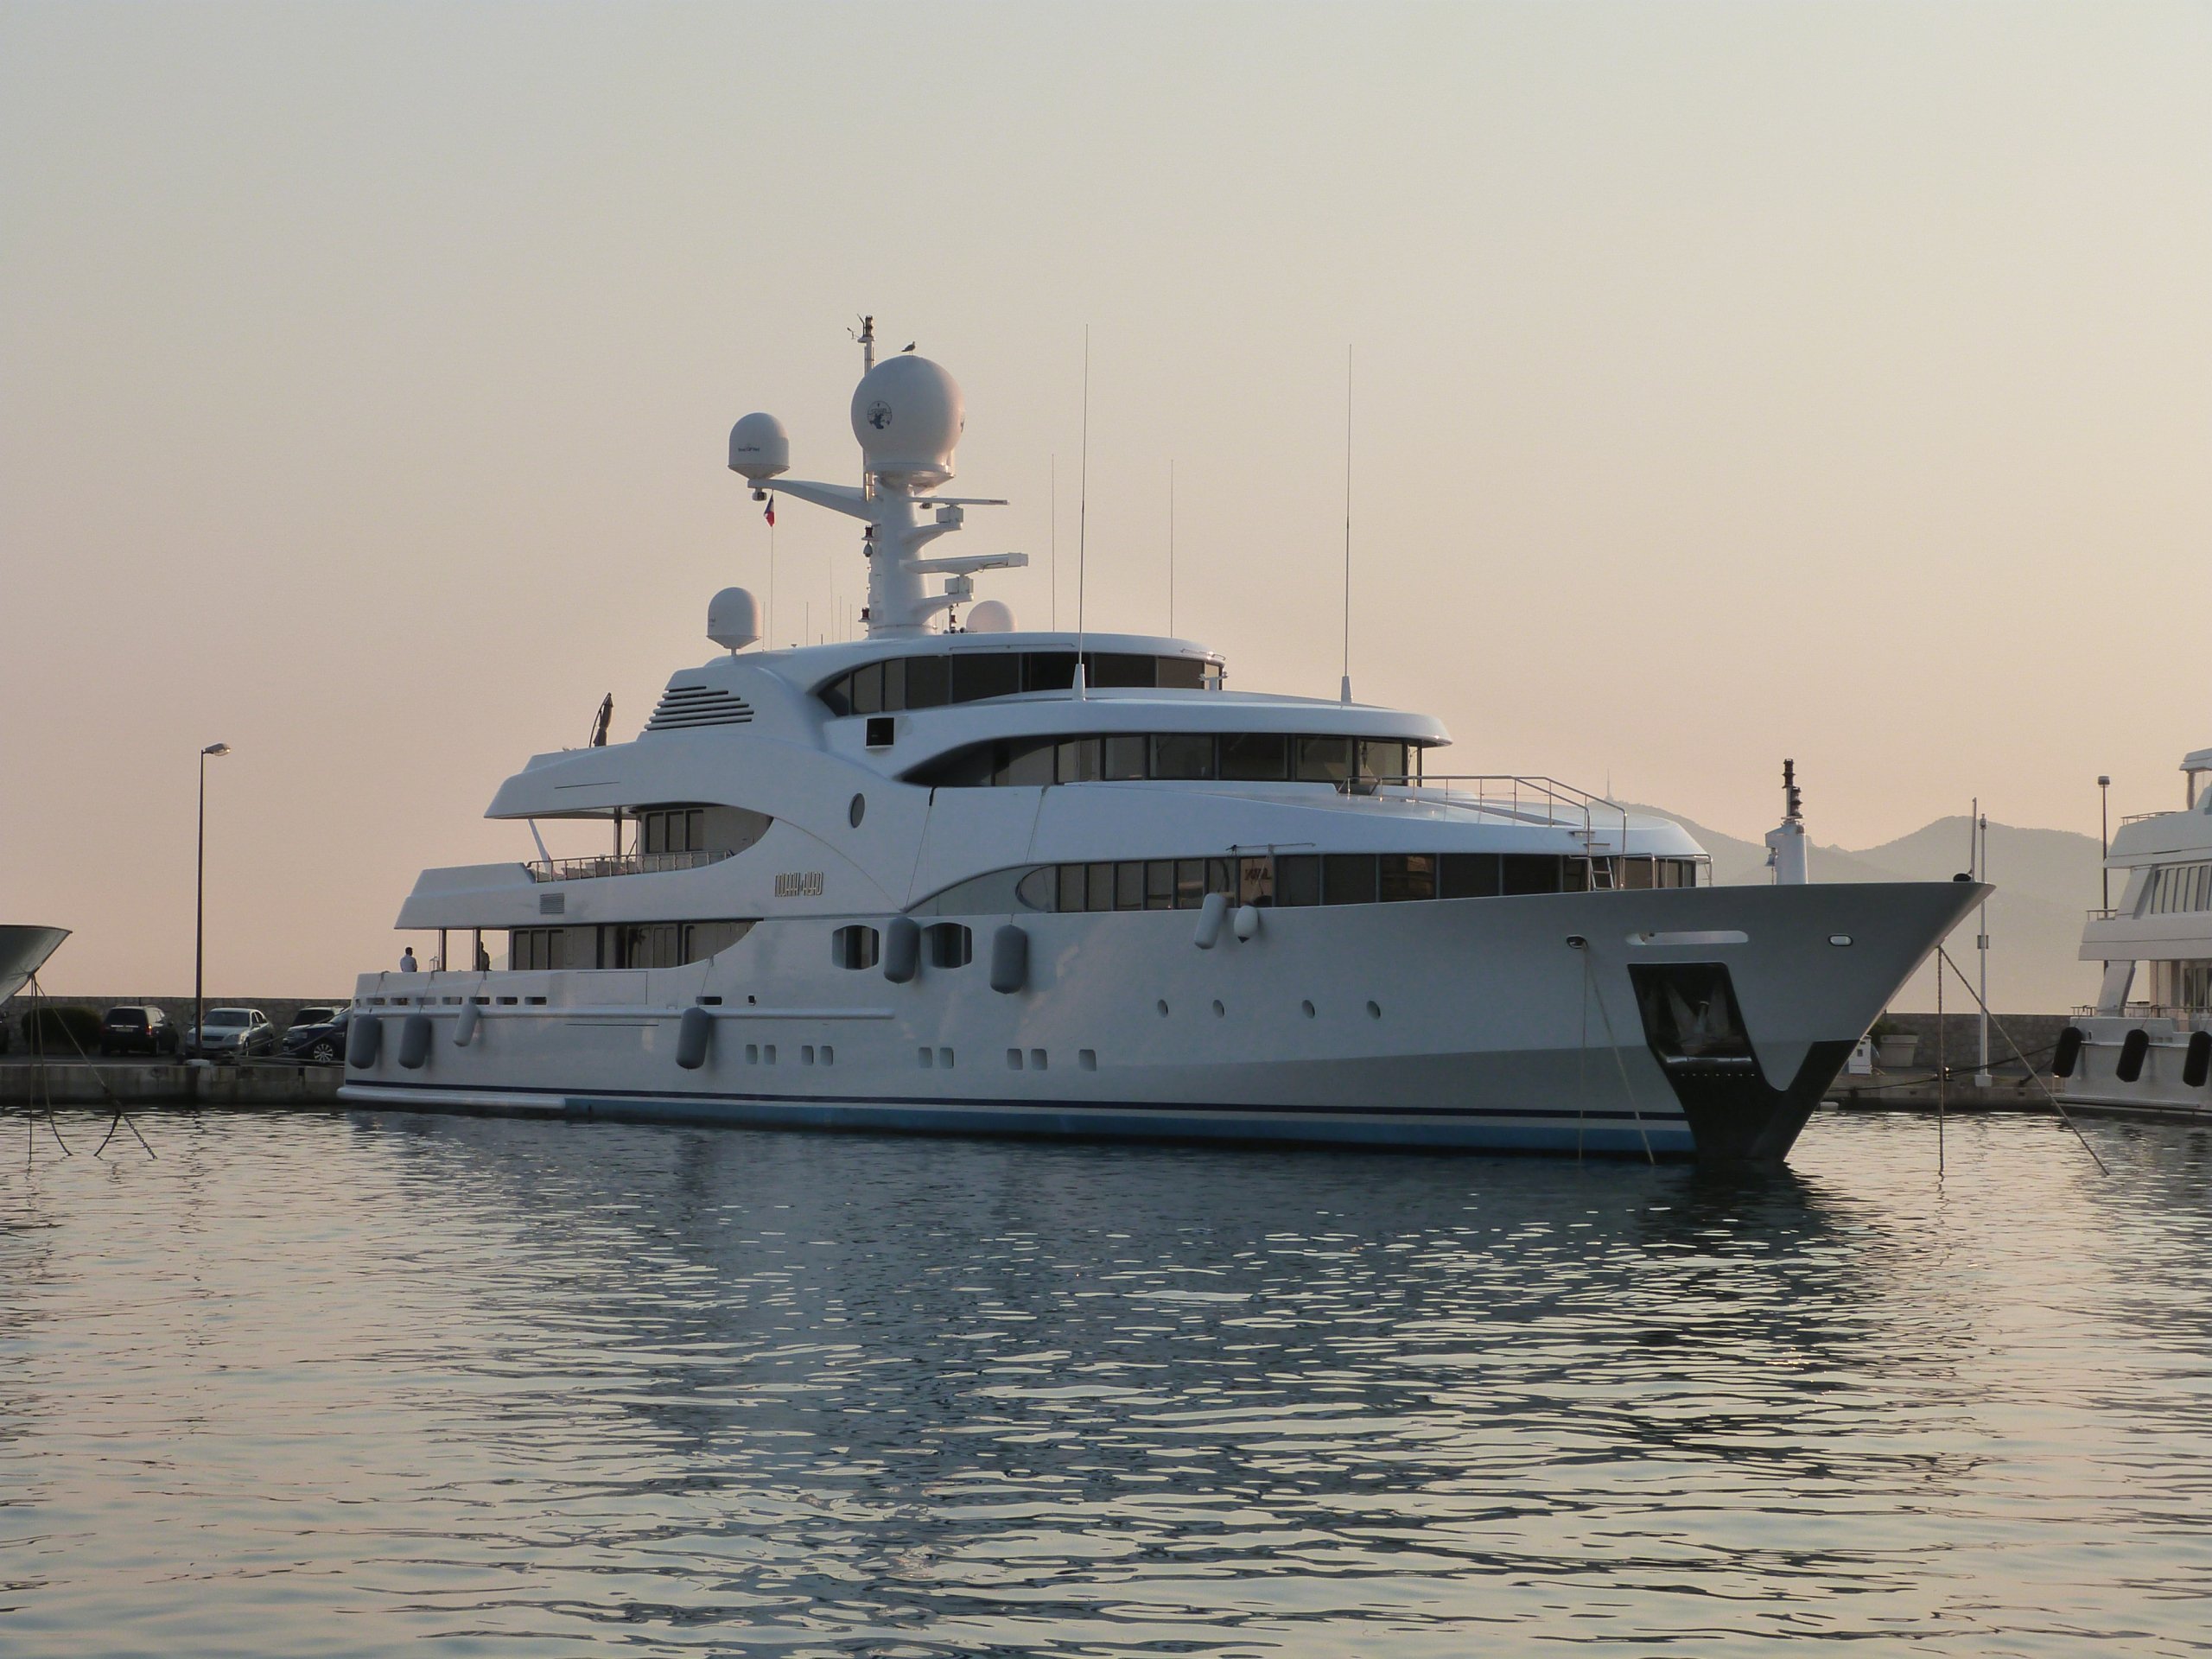 NOURAH VAN RIYAD Jacht • Yachtley • 2008 • eigenaar Prins Turki bin Mohammed